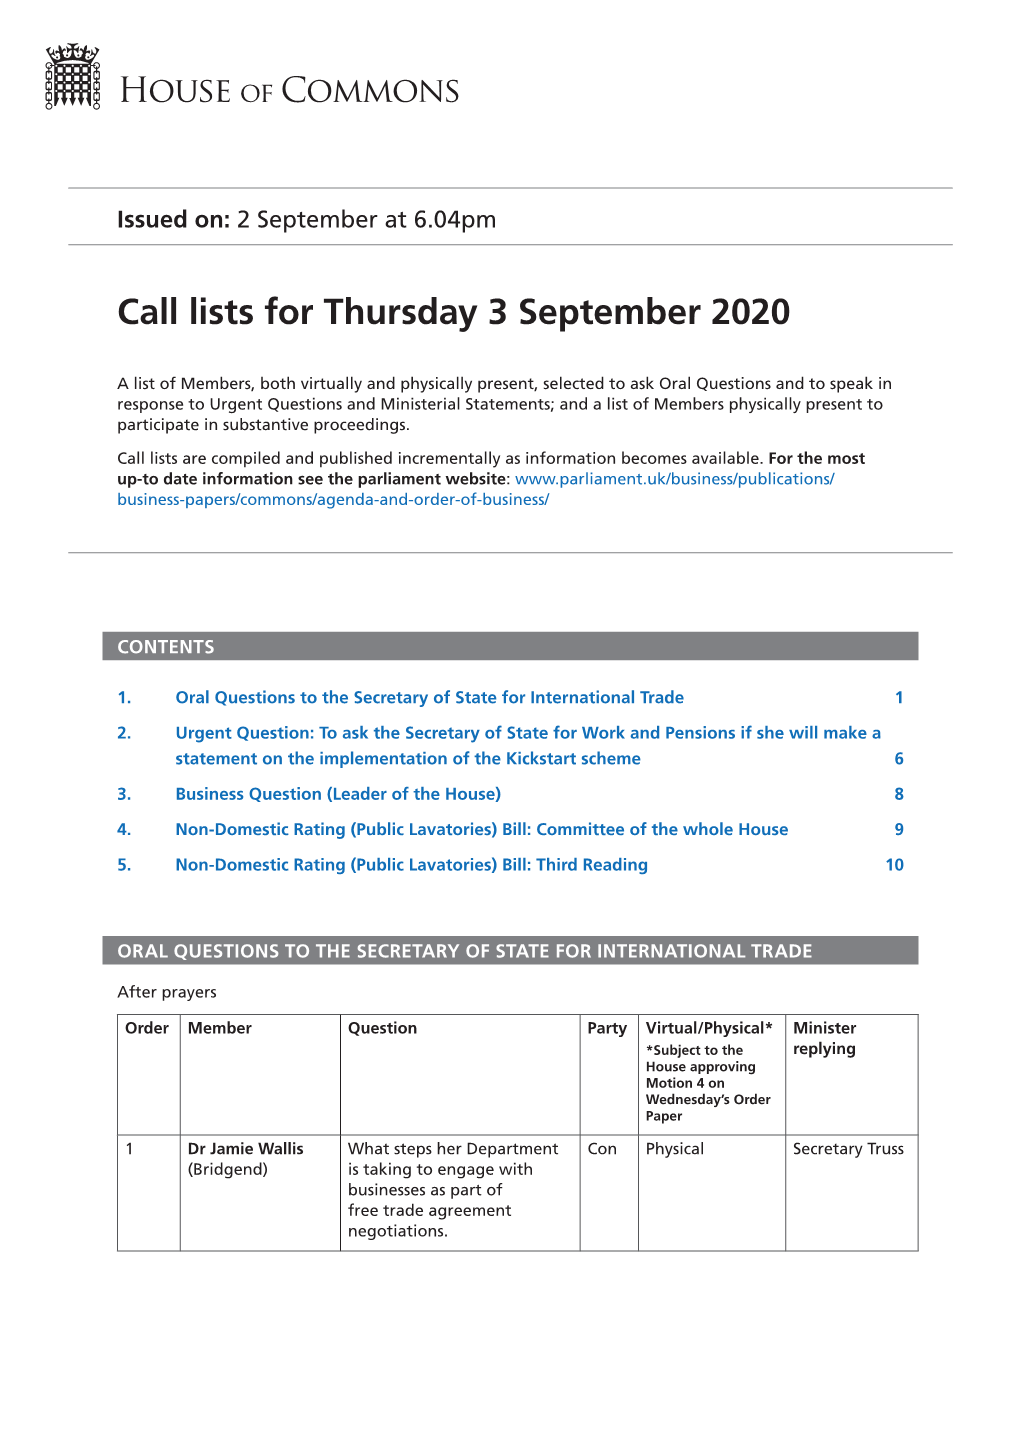 Call List for Thu 3 Sep 2020